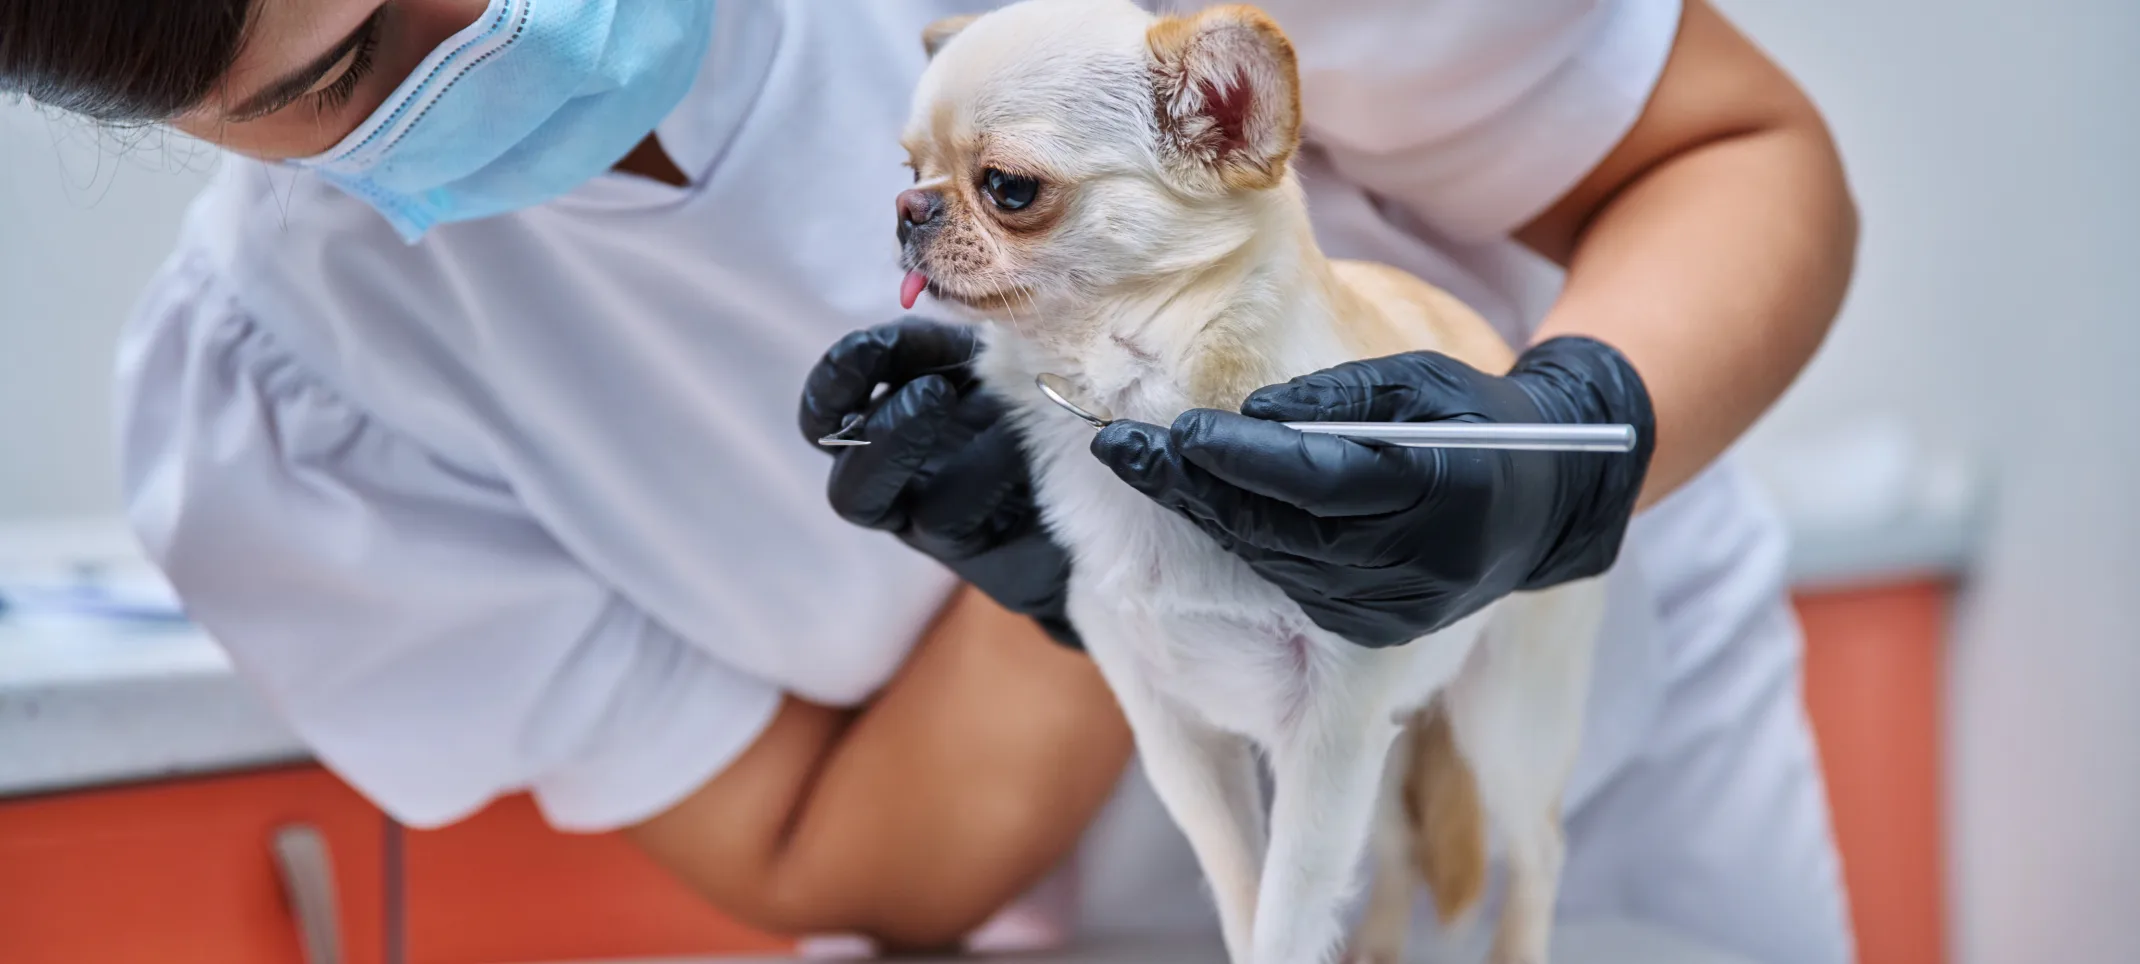 Small dog getting a dental service.